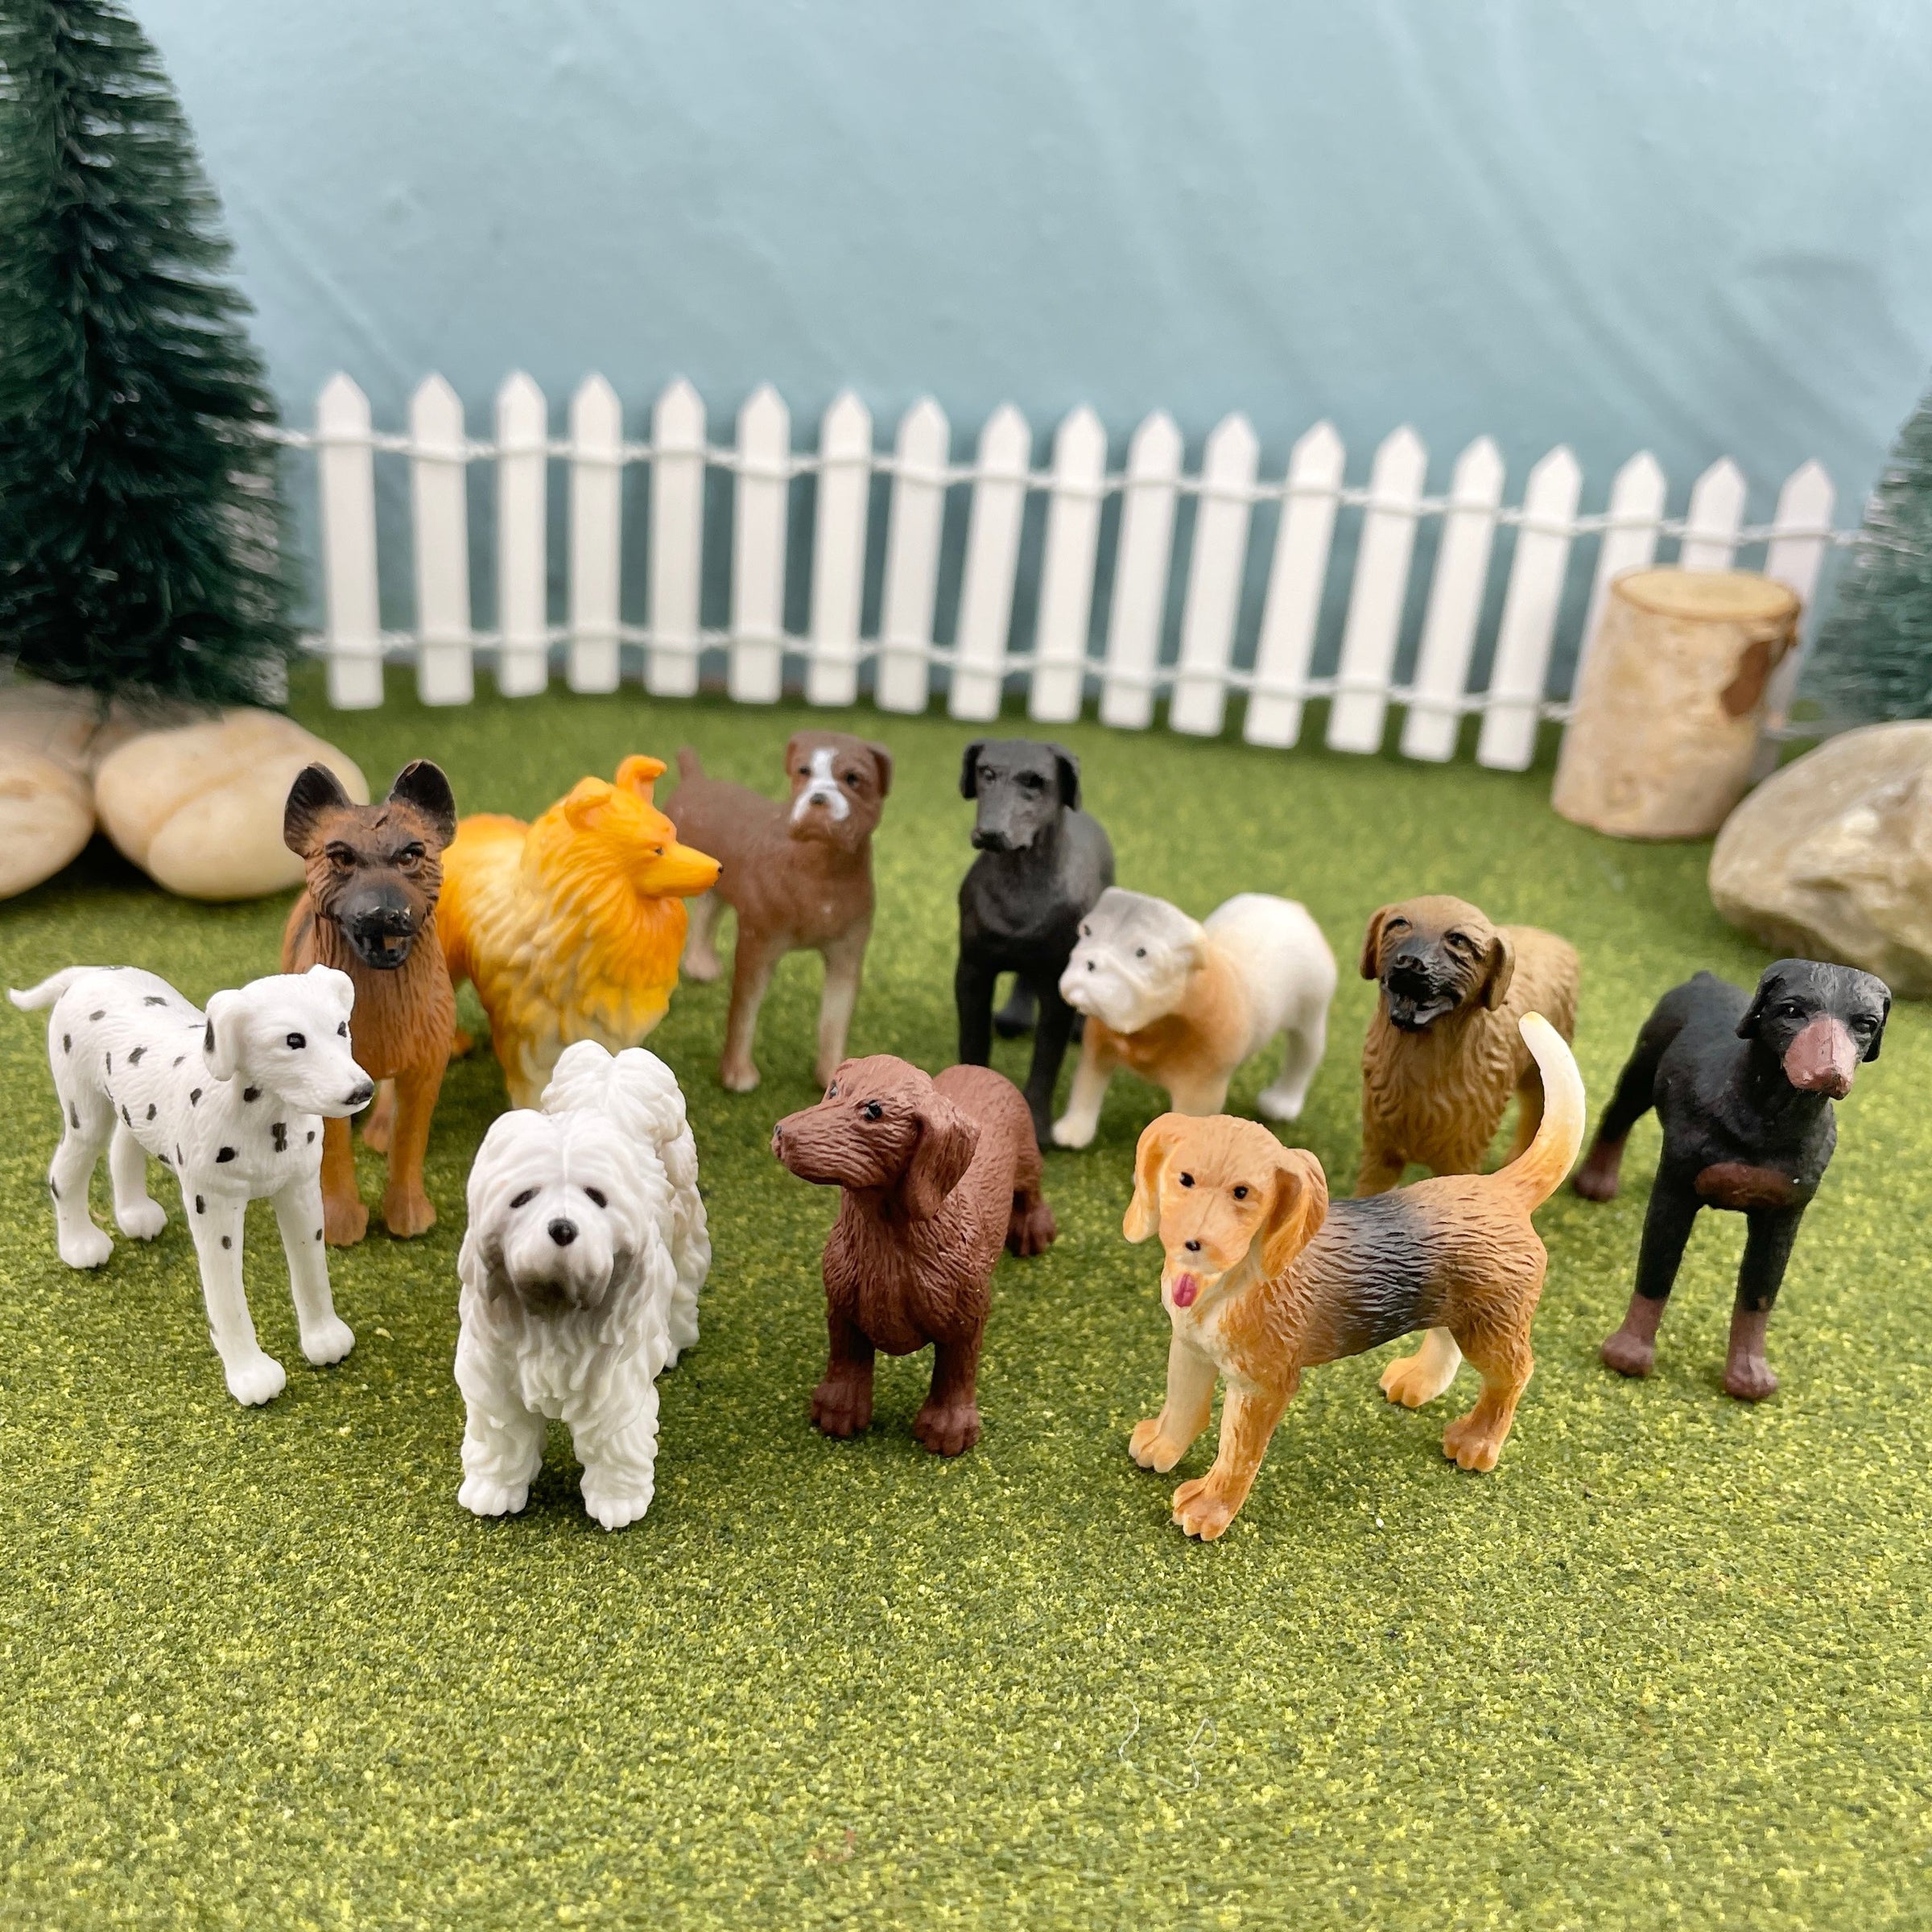 Safari Ltd: figurines in tuba dogs dogs toob 11 pcs.